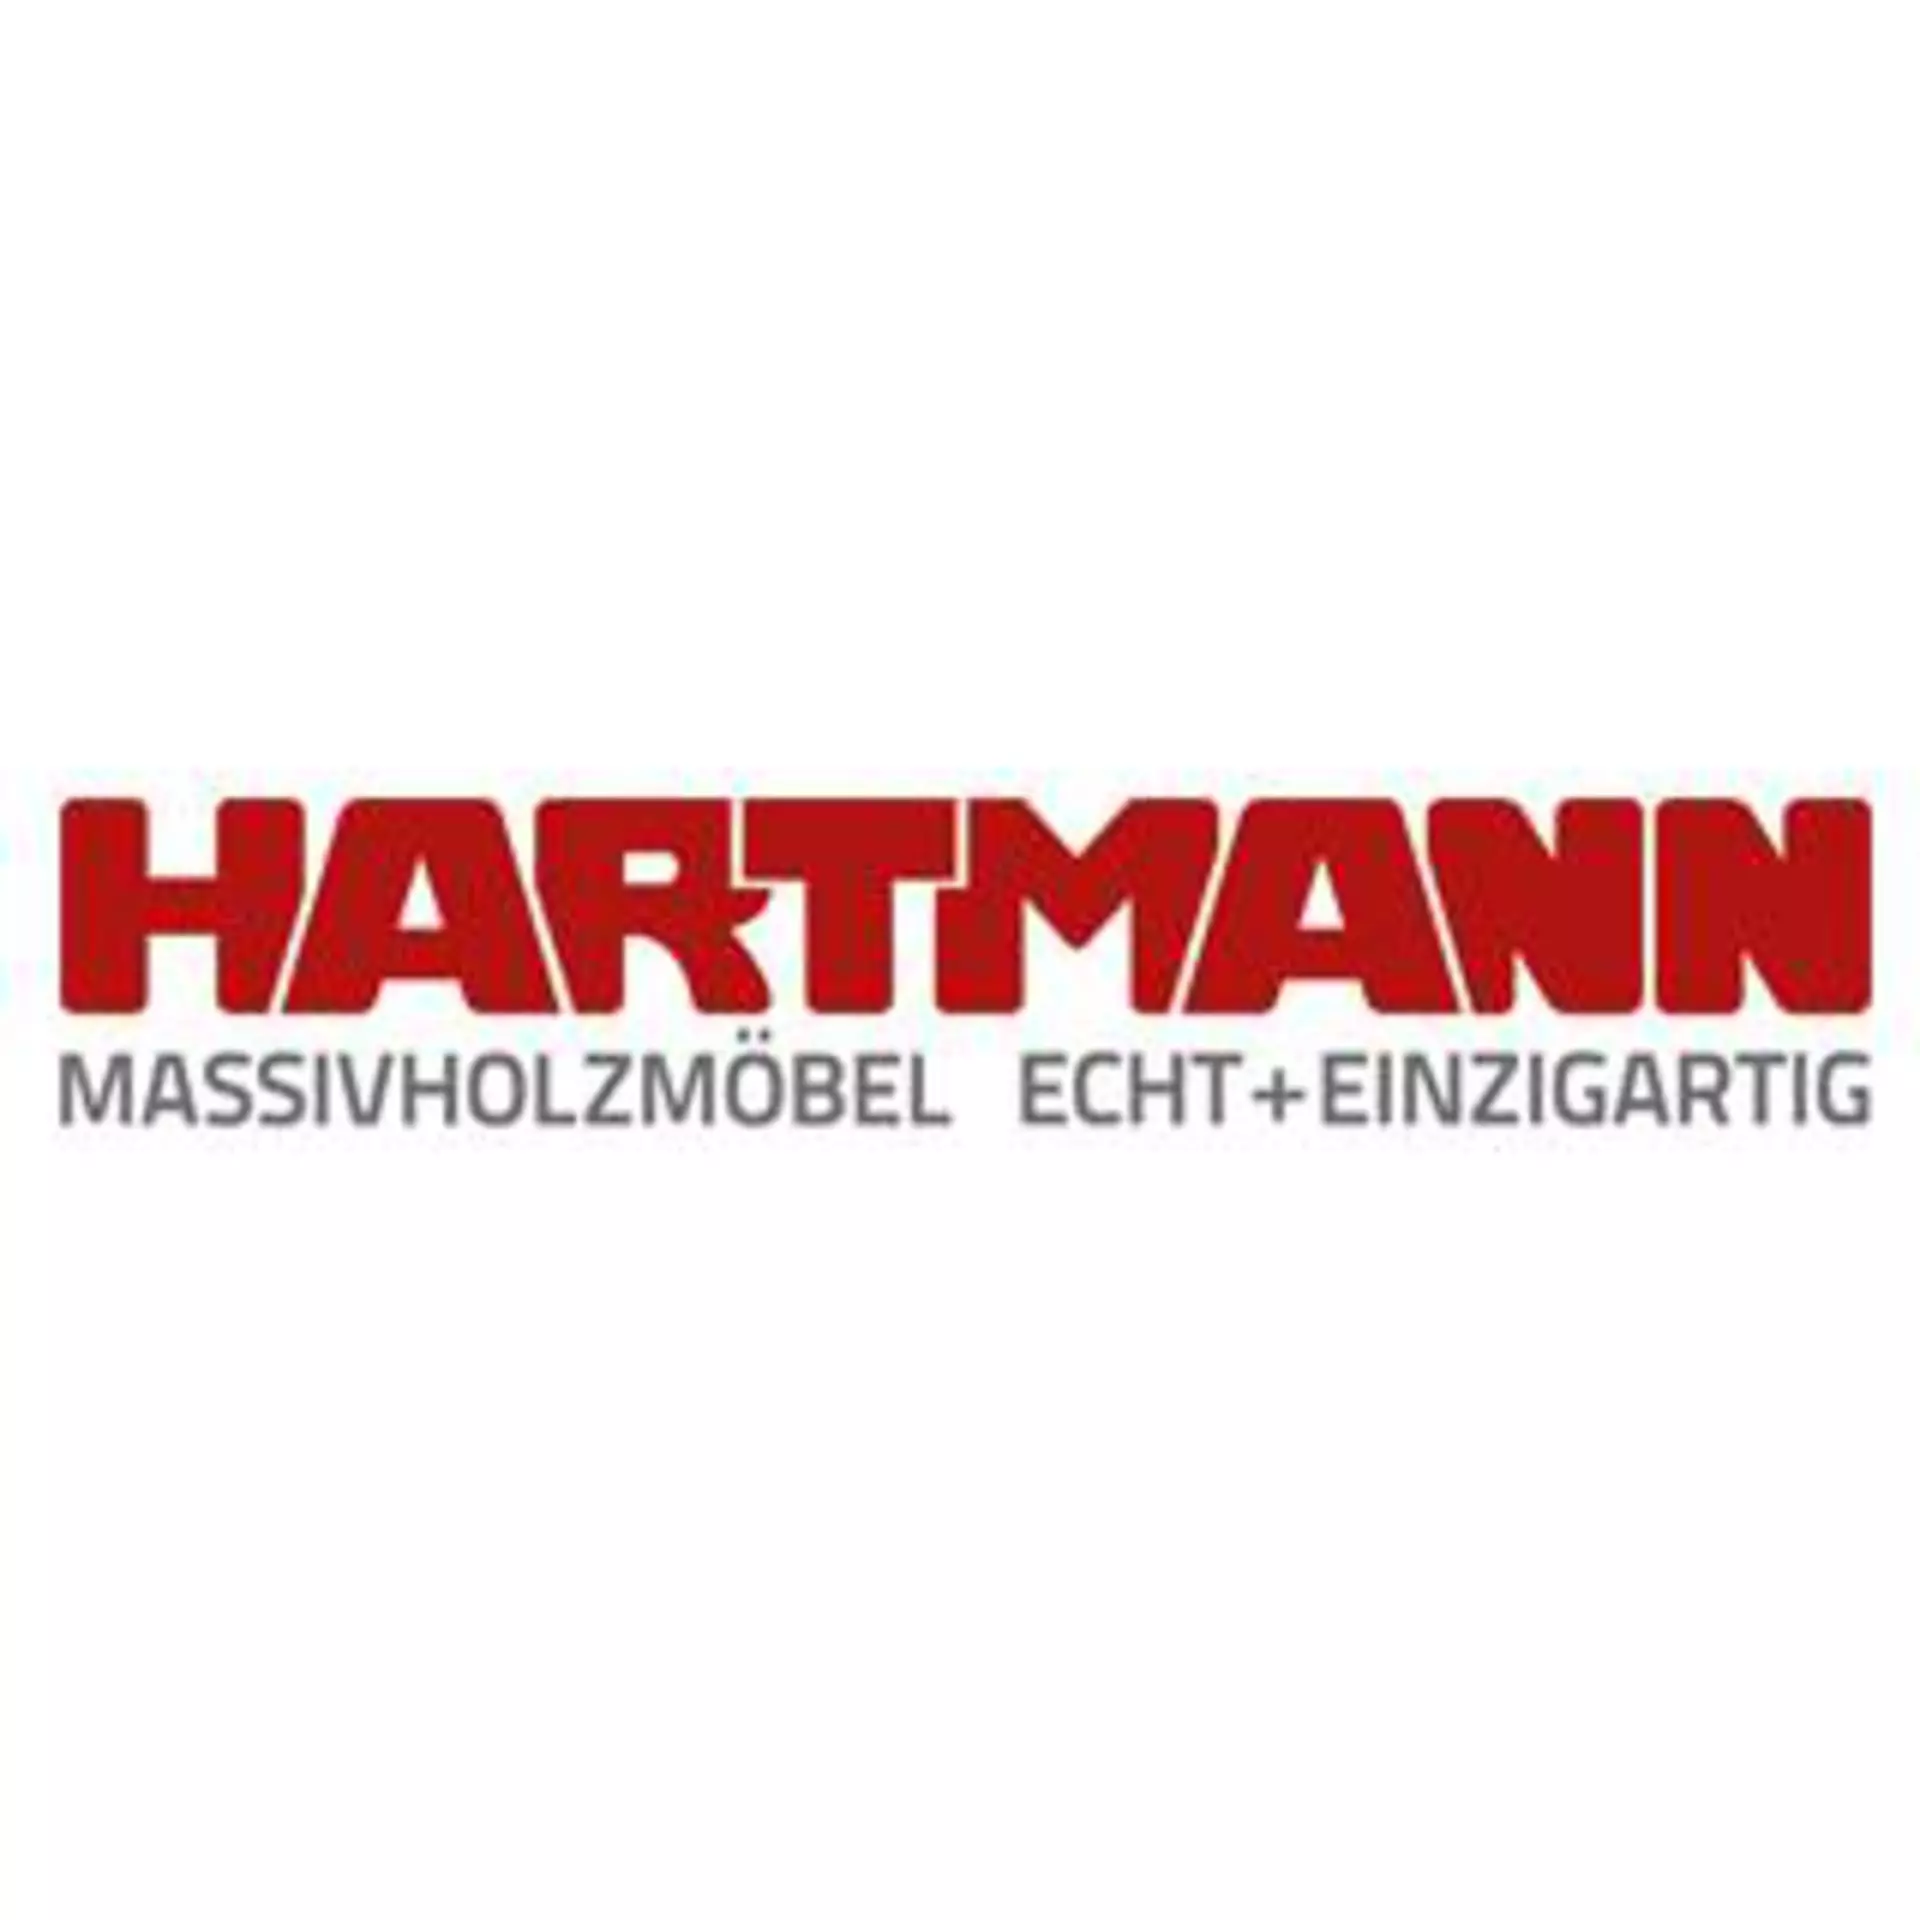 Hartmann - Massivholzmöbel